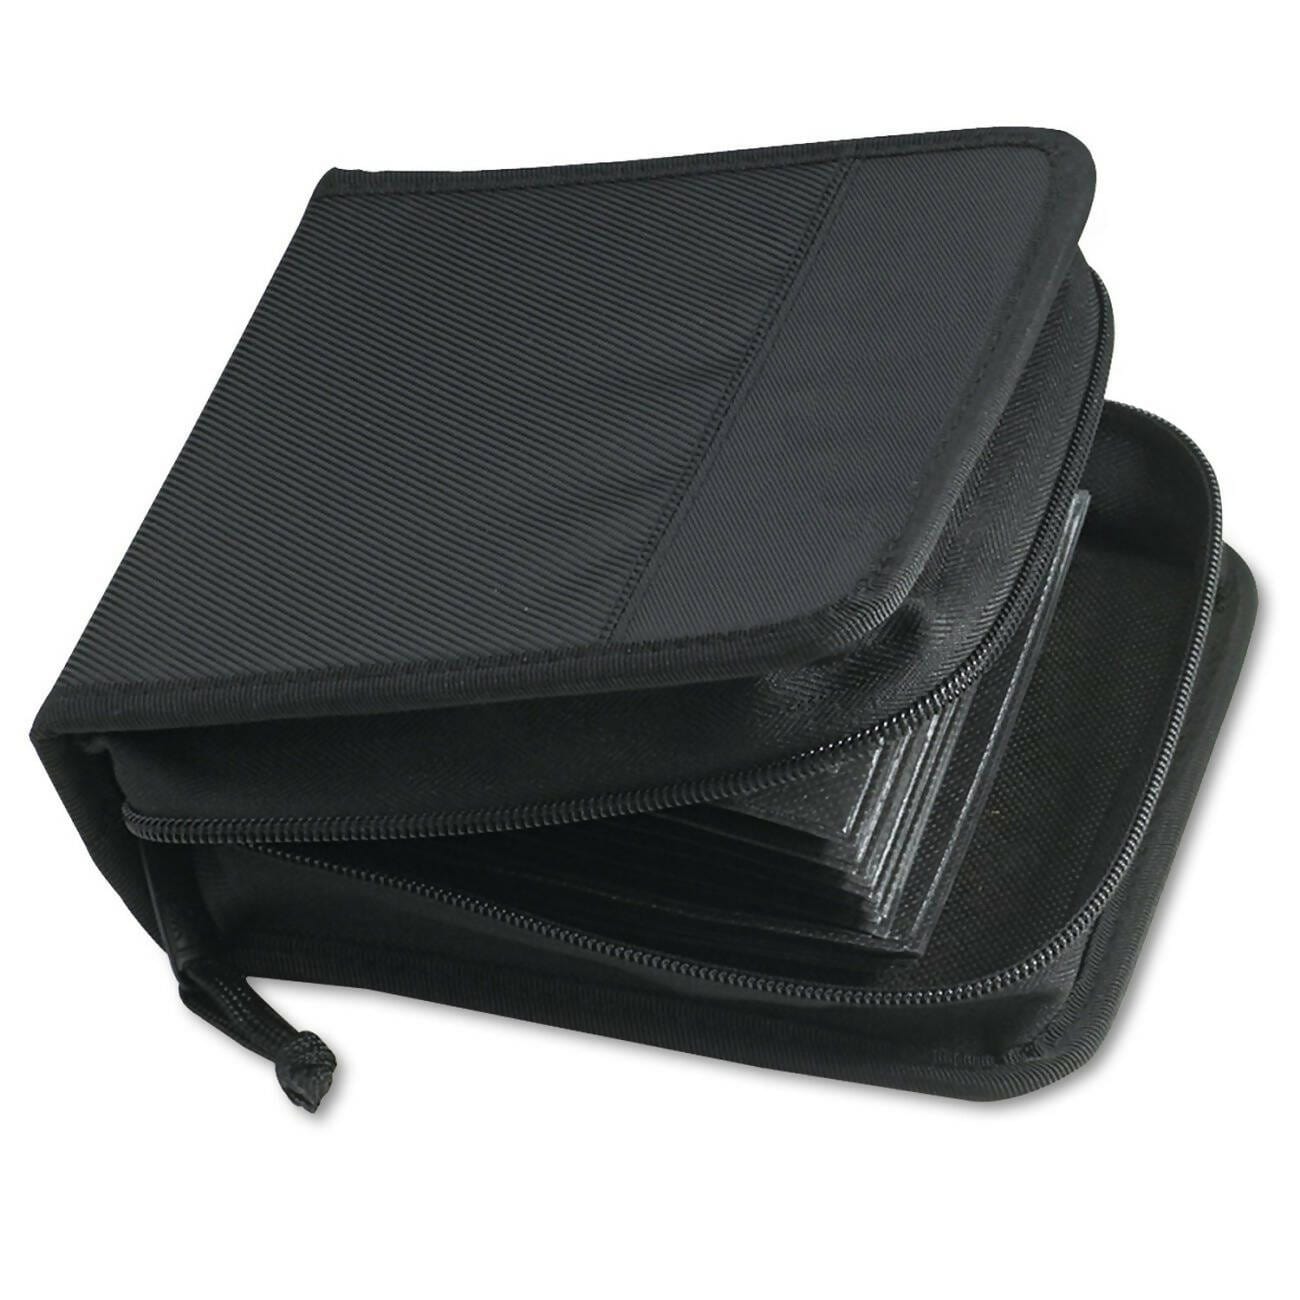 Provideolb DVD Cases Casetop CD / DVD Case Storage Organizer Booklet 80 Capacity Black - DVD52580